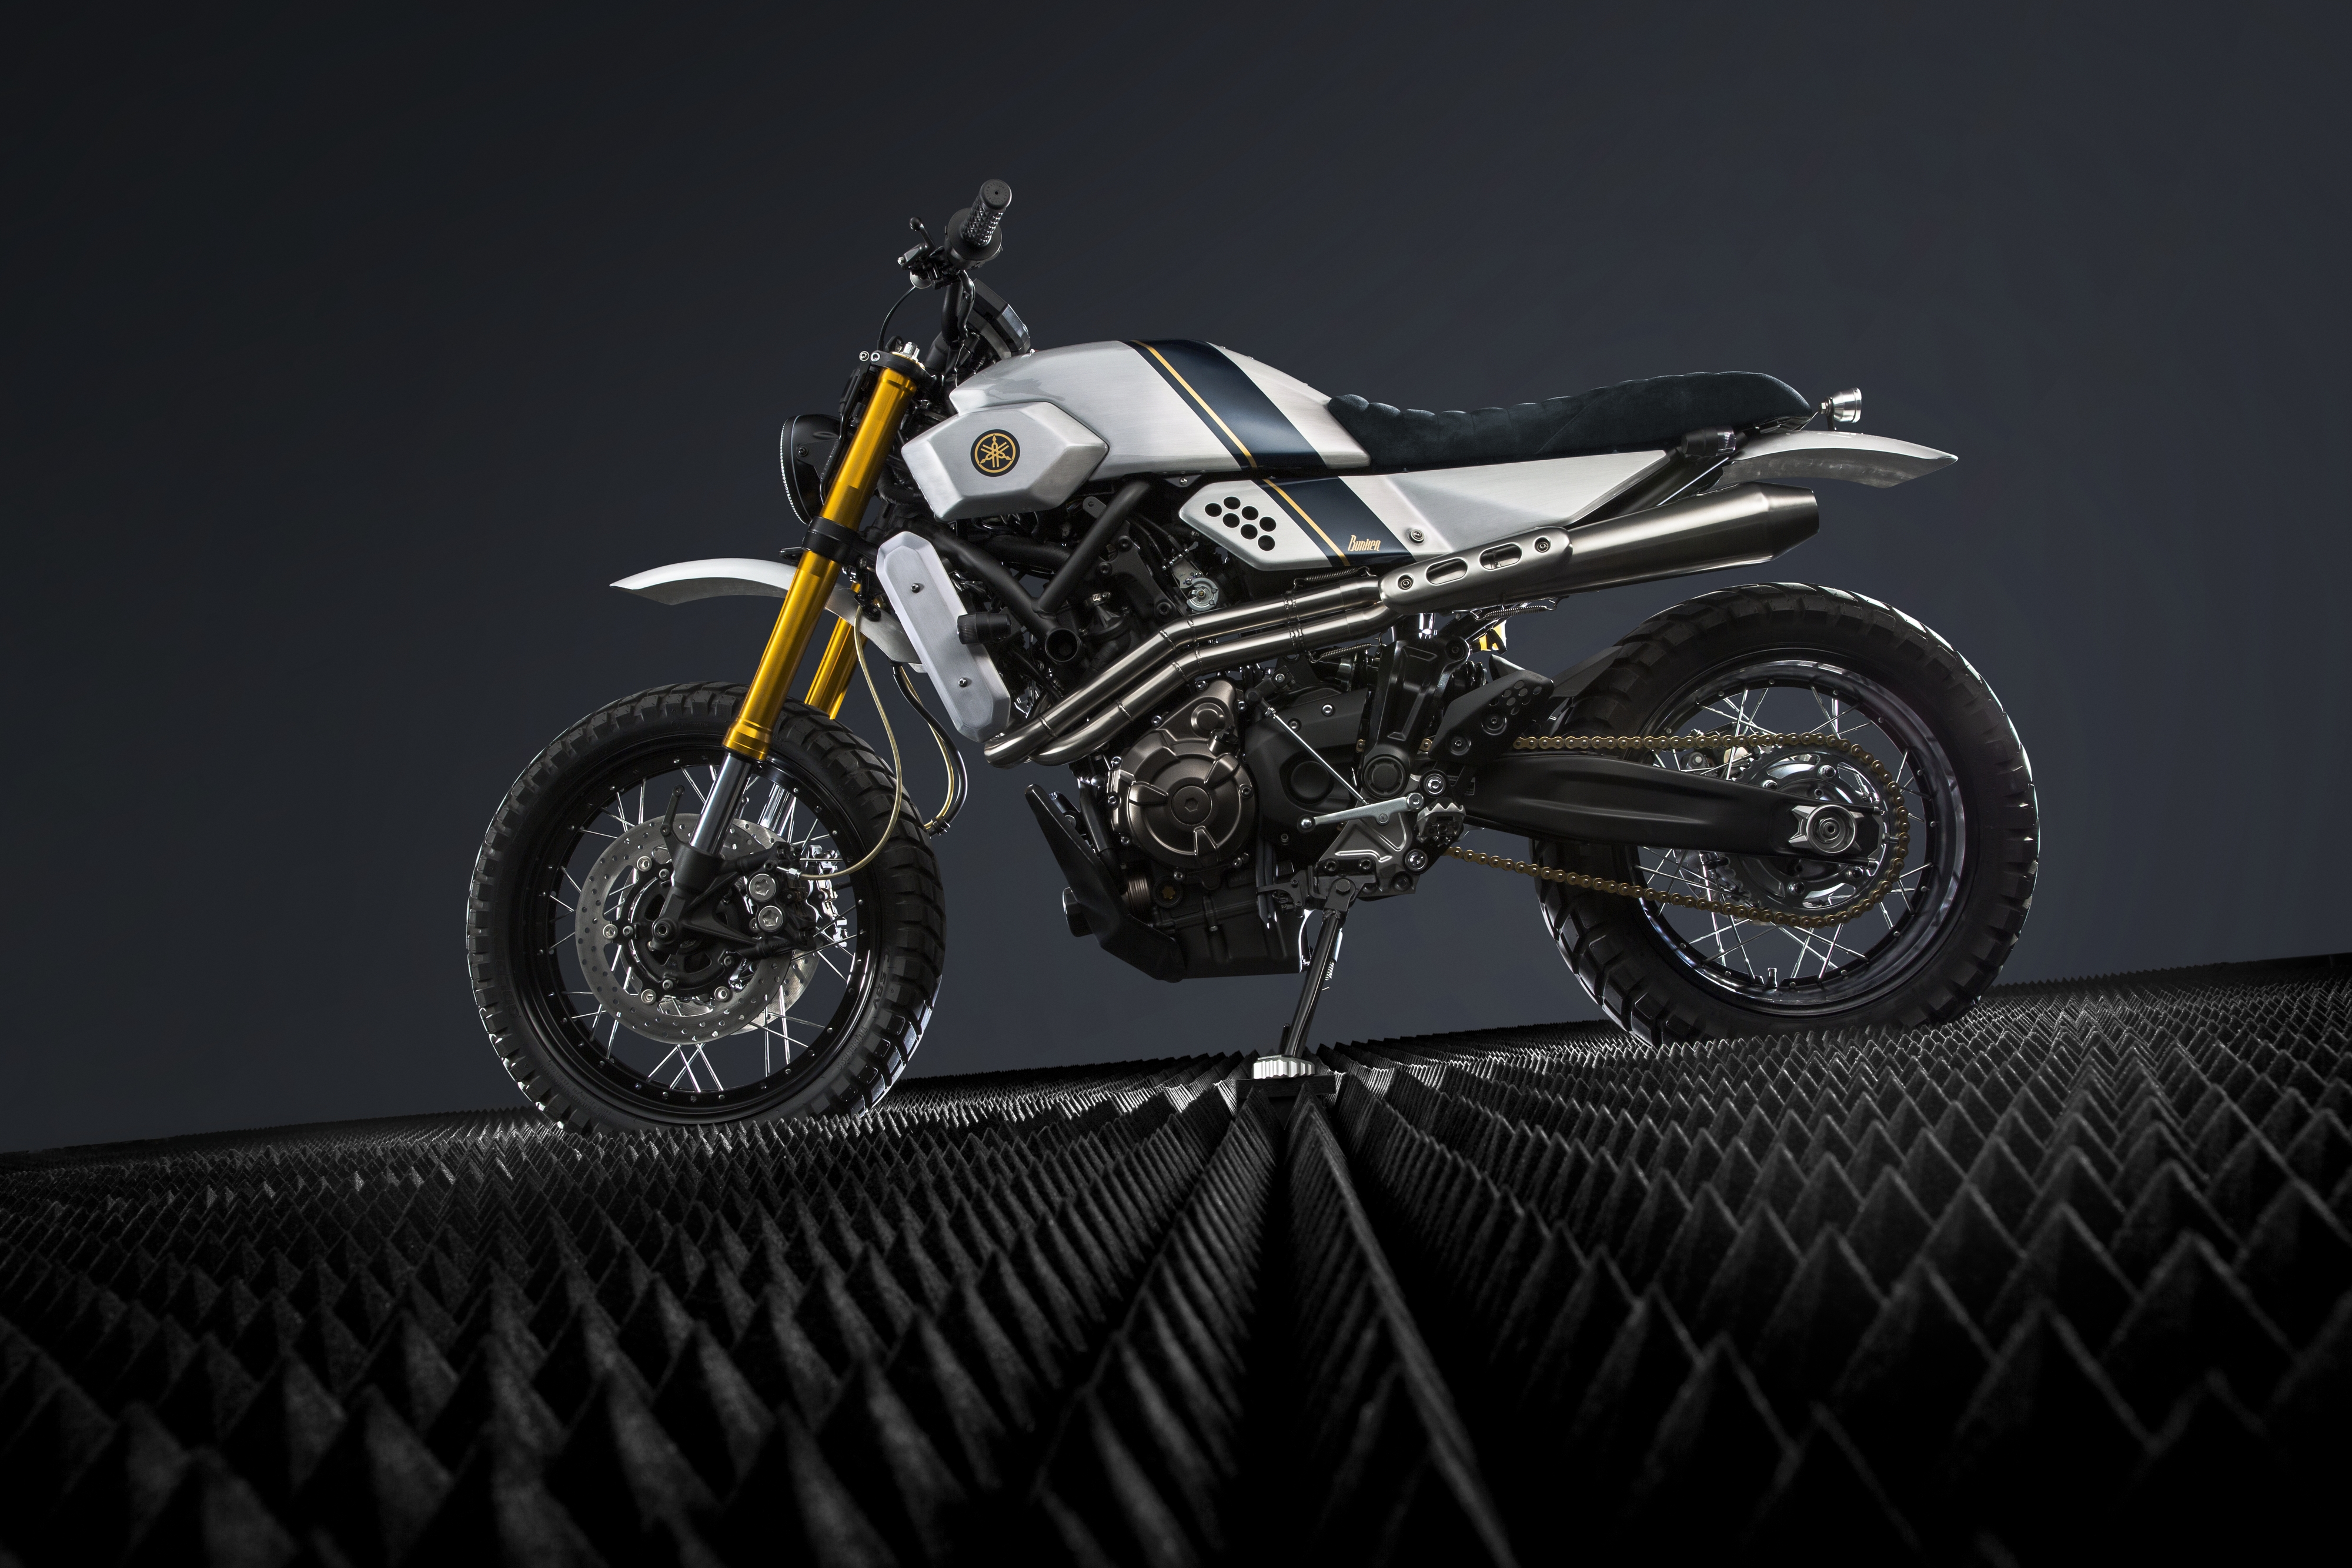  Nuova Yamaha Yard Built XSR 700 by Bunker Custom Motorcycles – Video